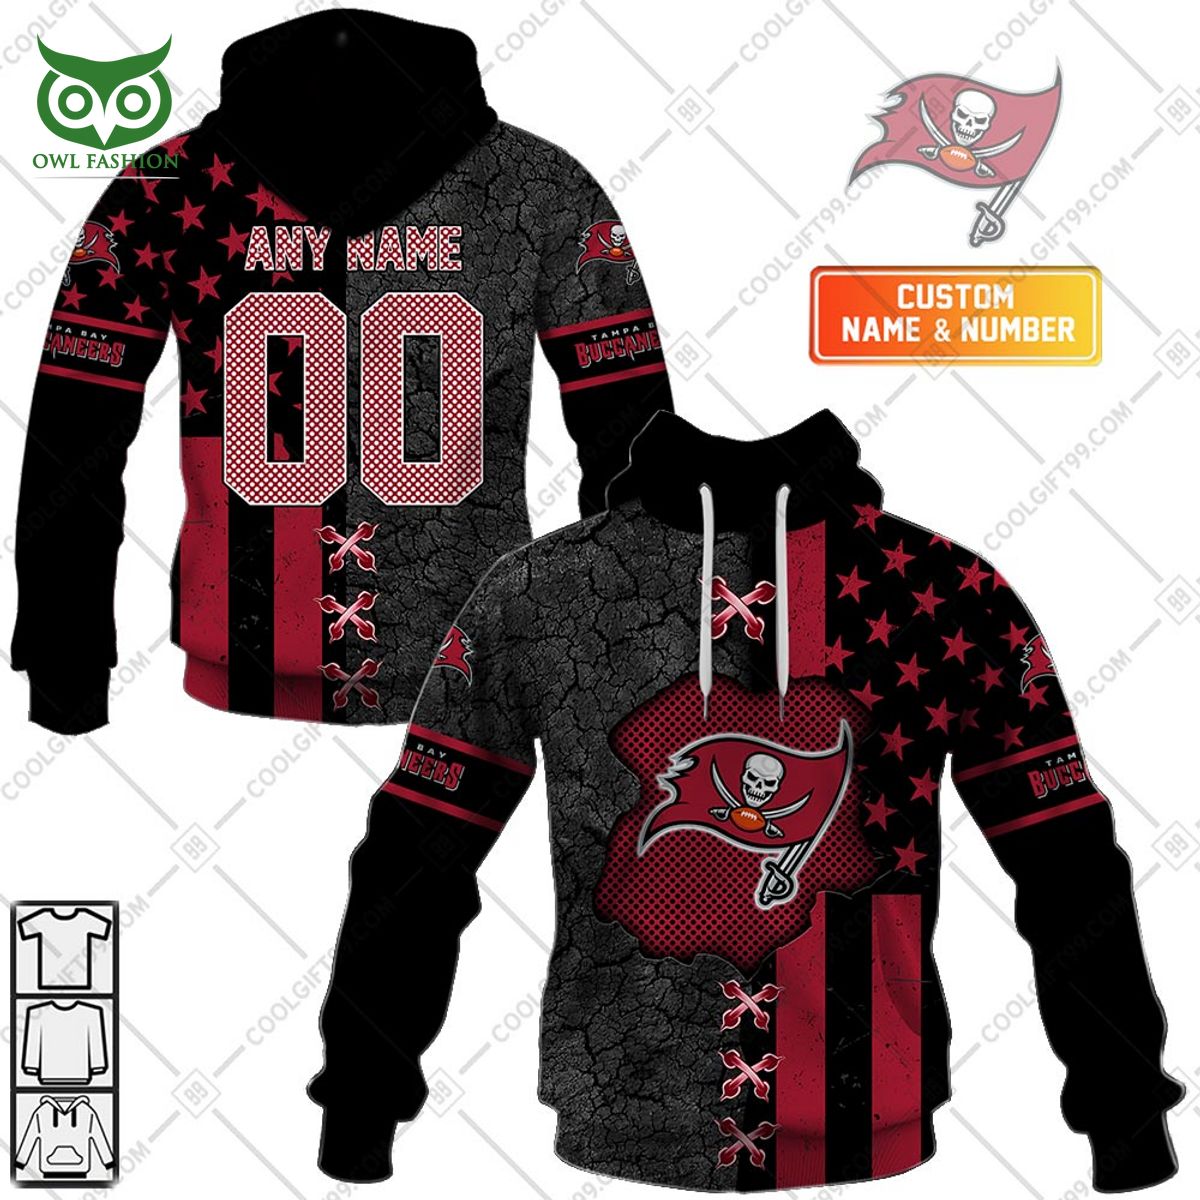 Customized NFL Tampa Bay Buccaneers hoodie shirt printed